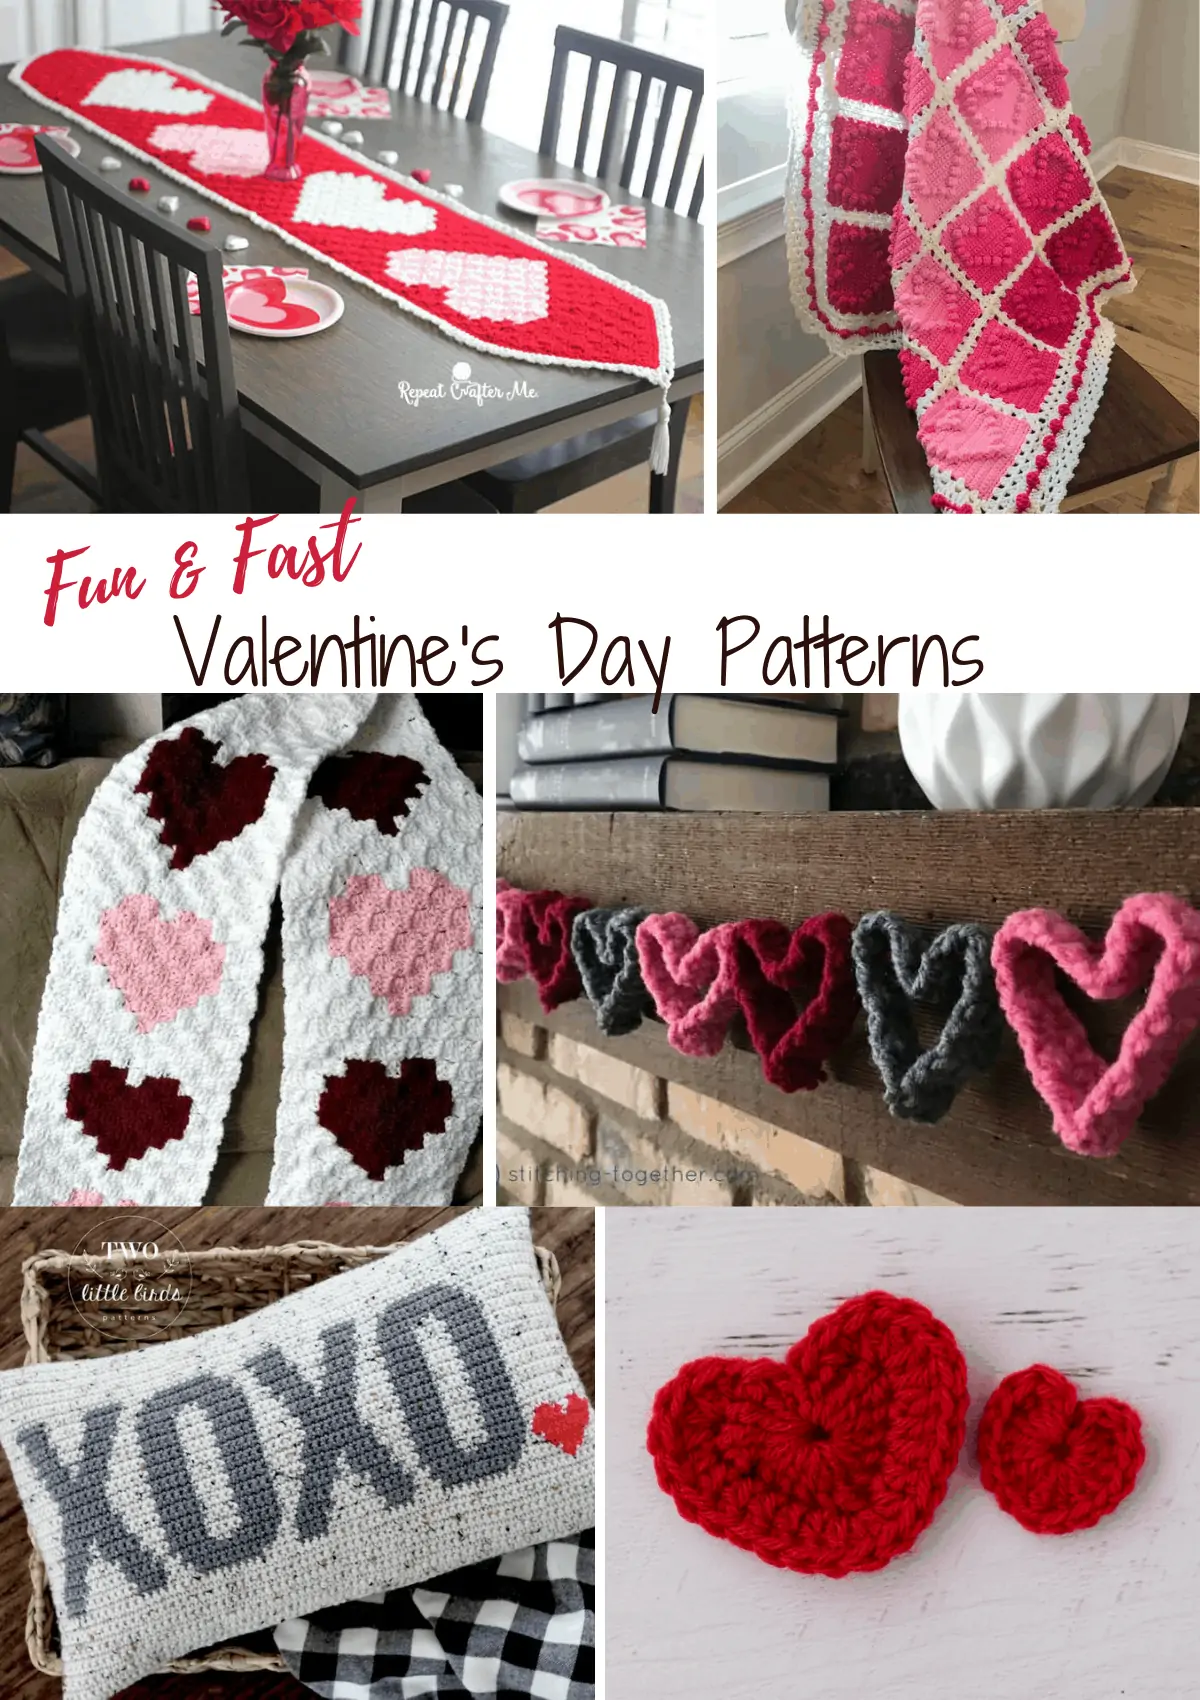 collage of crochet valentine's day patterns